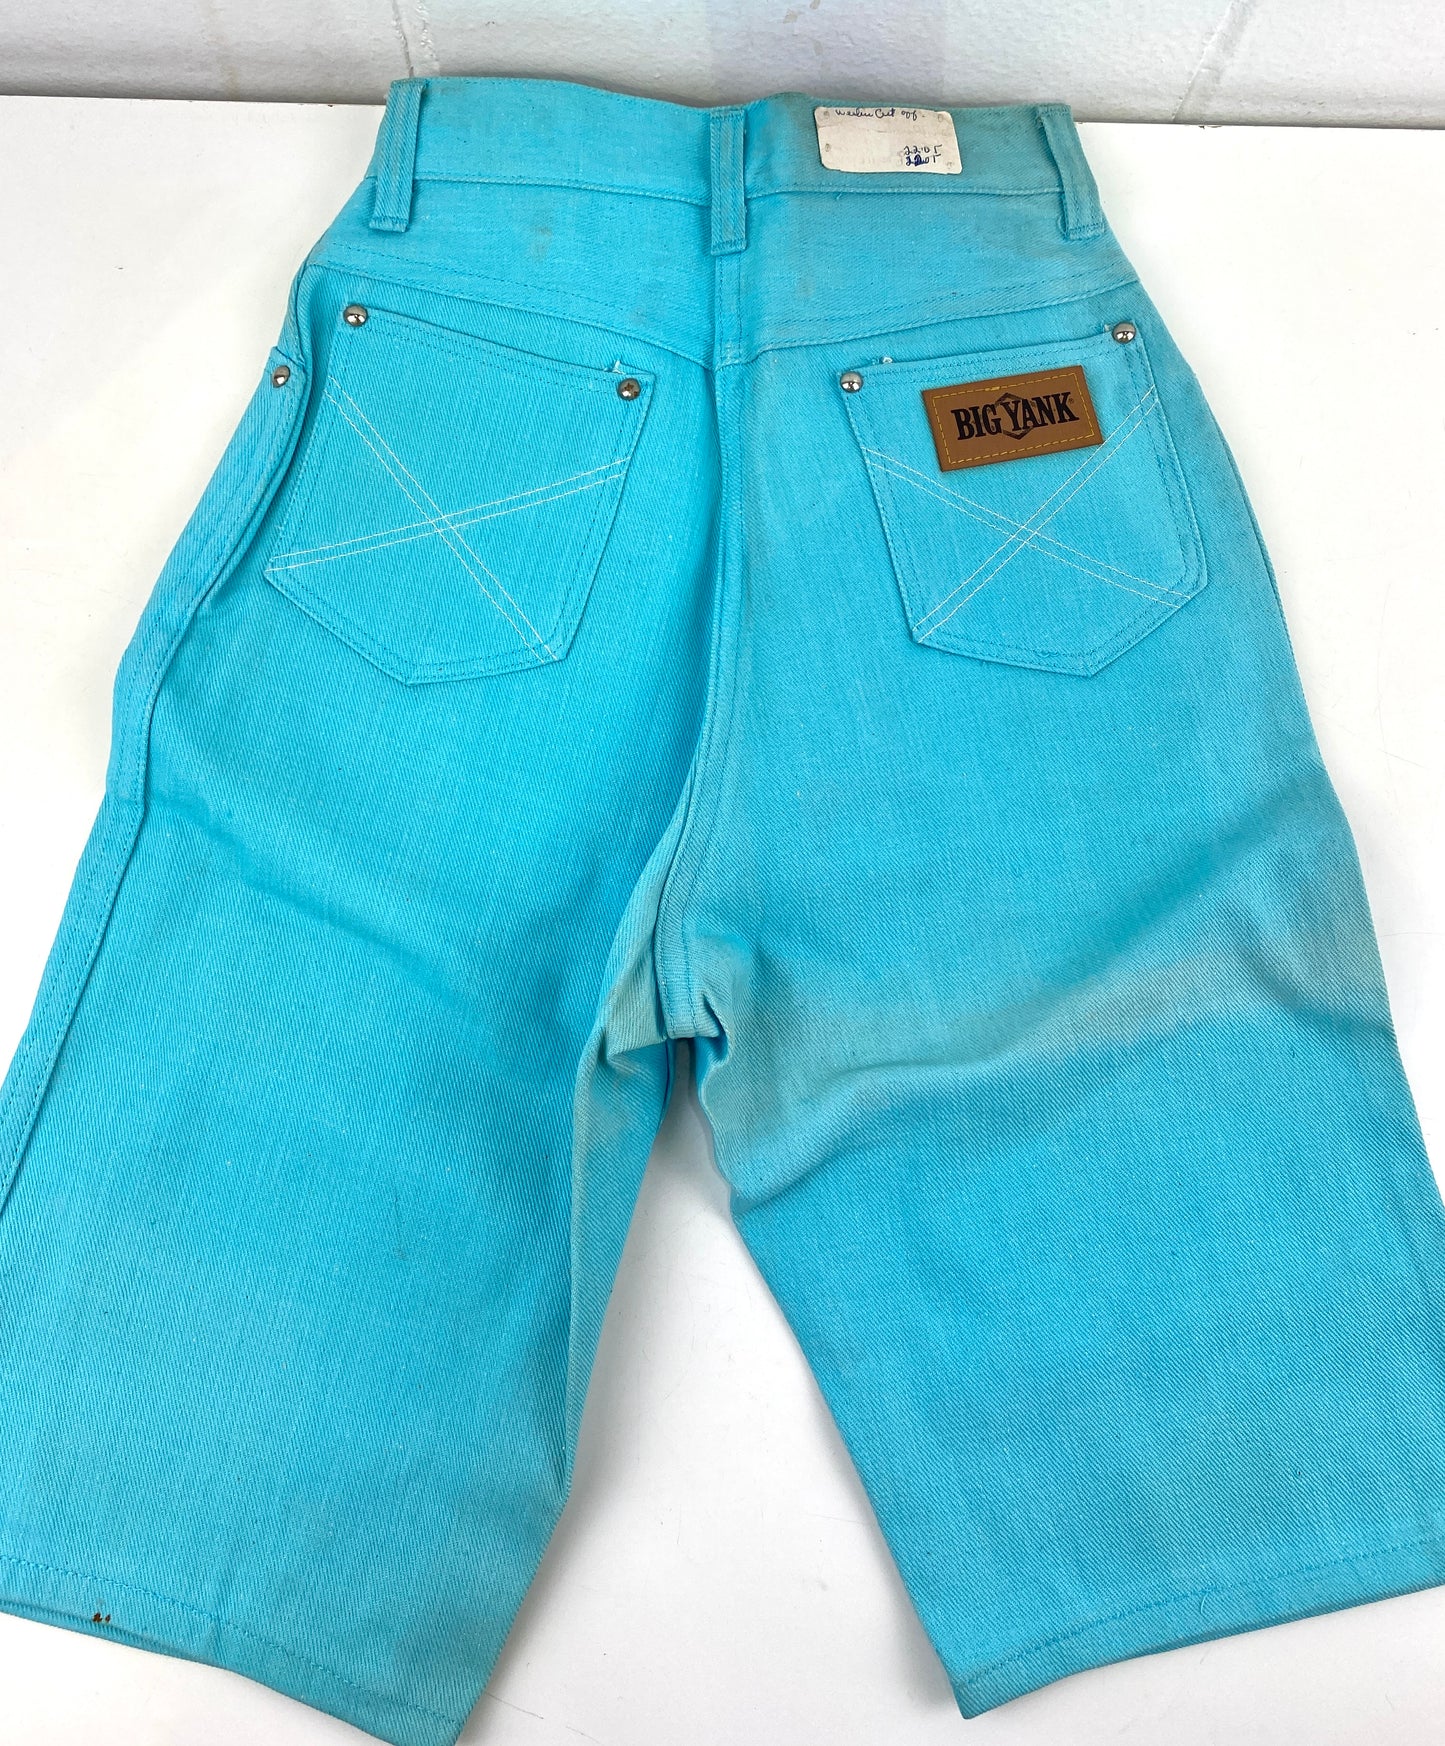 Vintage 1970s Deadstock Girls Jeans, Kids 'Big Yank' Cut-Off Jean Shorts, Blue Denim, NOS